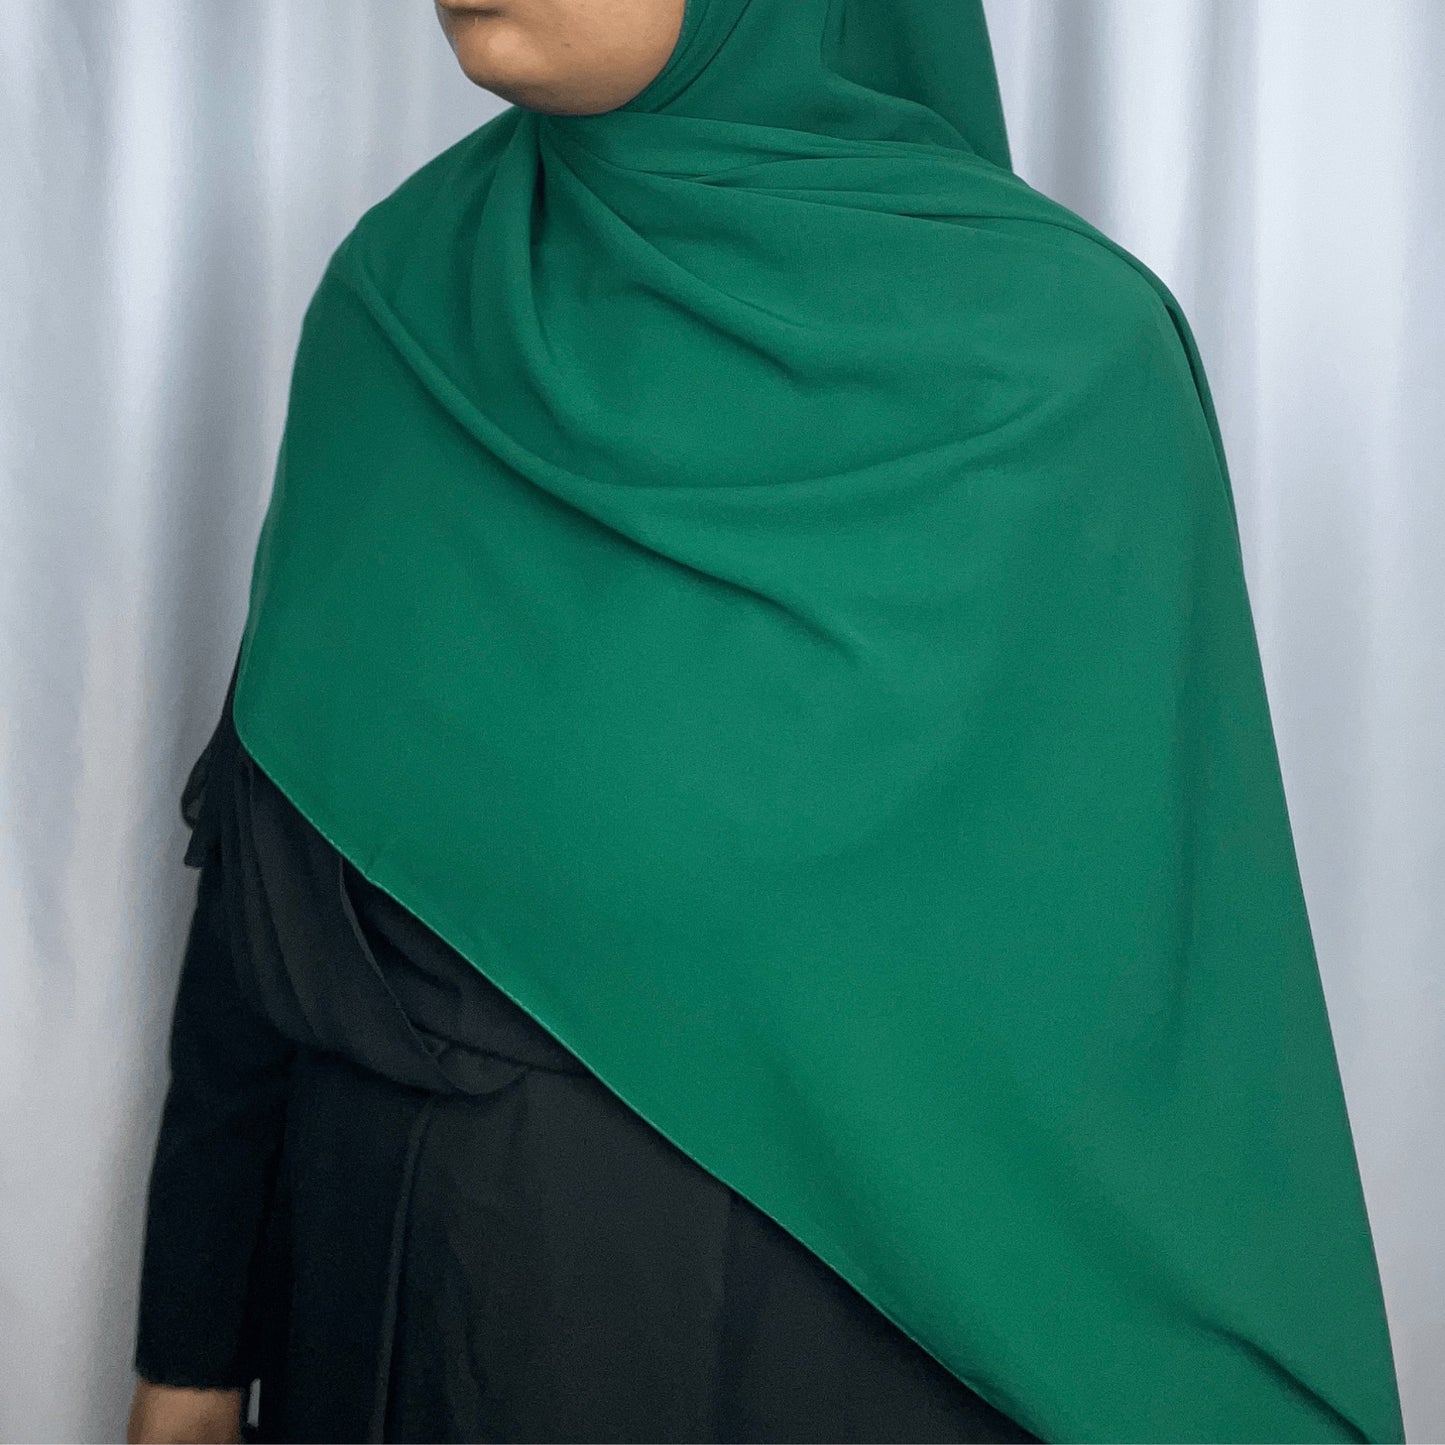 Premium Medina Silk Hijab Green Forest - An Nisaa